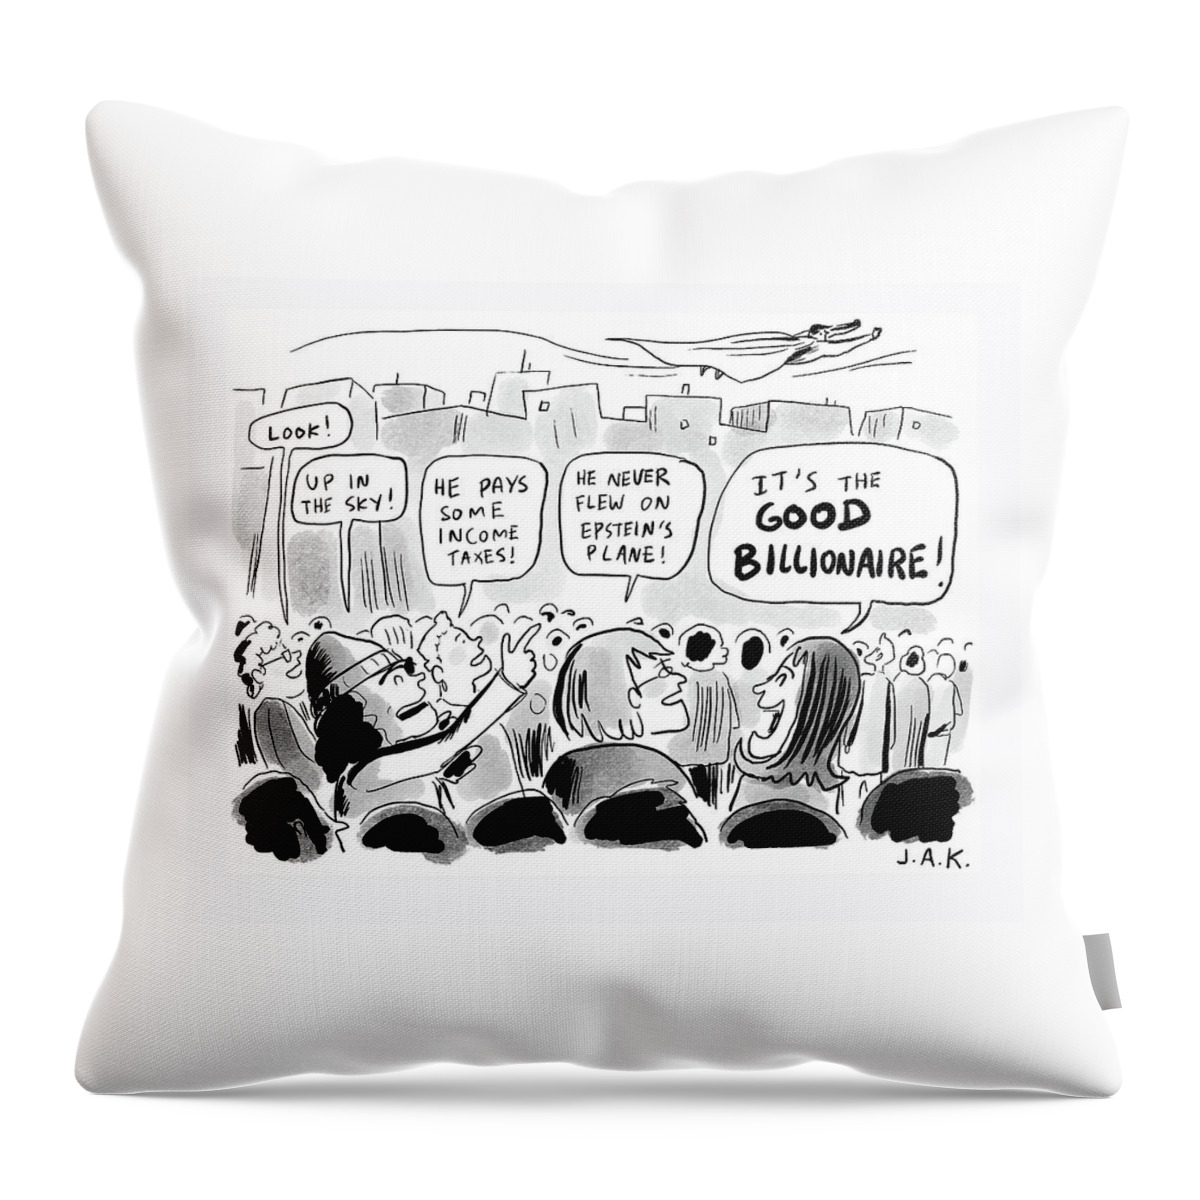 The Good Billionaire Throw Pillow